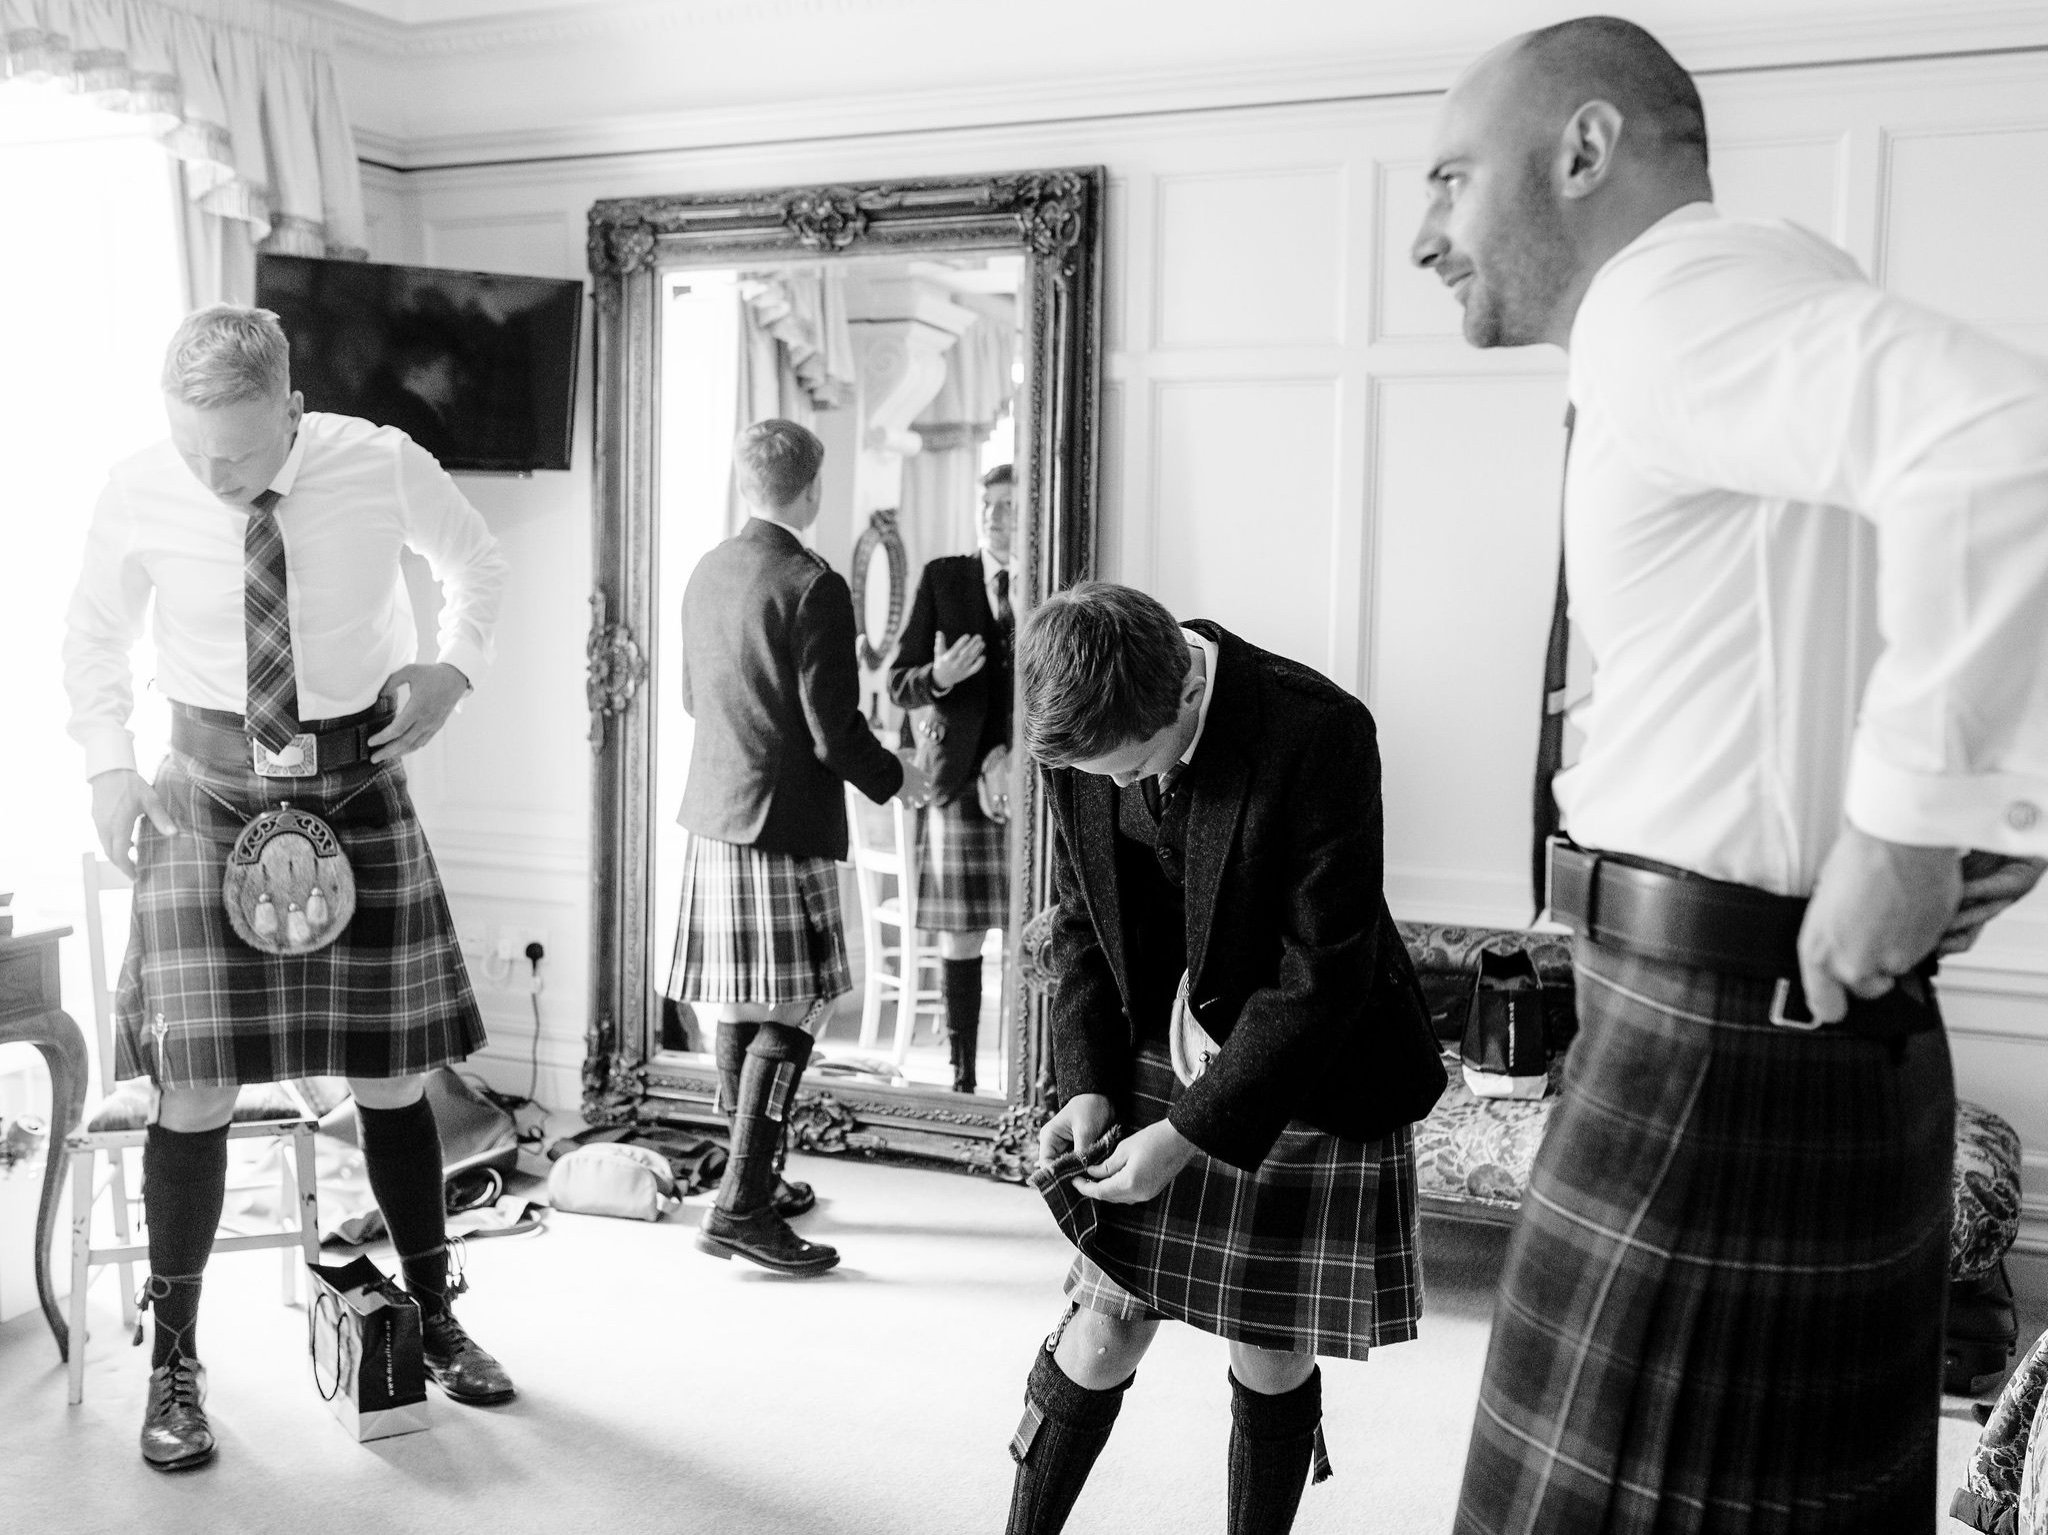 17_springkell-house-wedding-photographer-dumfries-scotland-groom-preparations.jpg